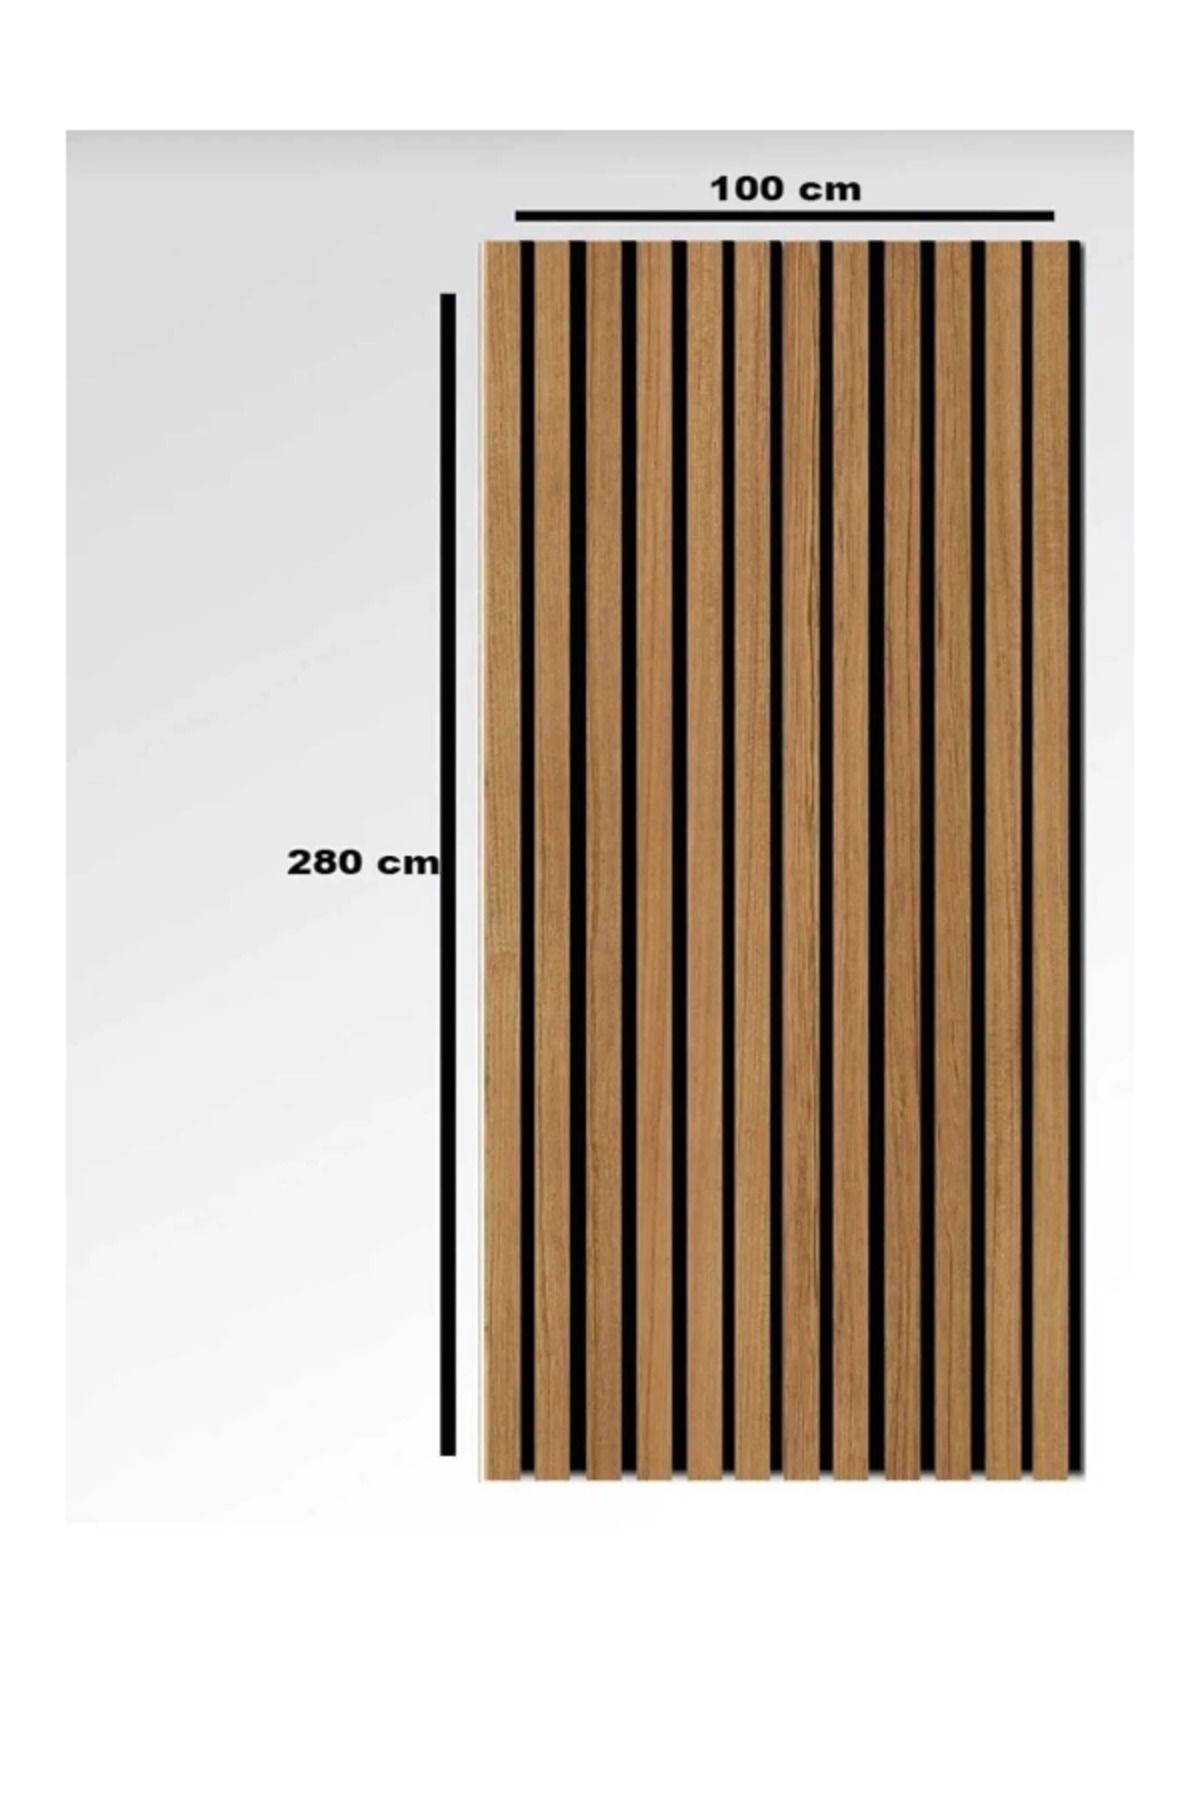 DETAYPOLİURETAN Mdf Ahşap Akustik Duvar Paneli 100x280 Cm 3mm Keçe & 8mm Mdflam ( Teak ) Kolay Uygulanabilir